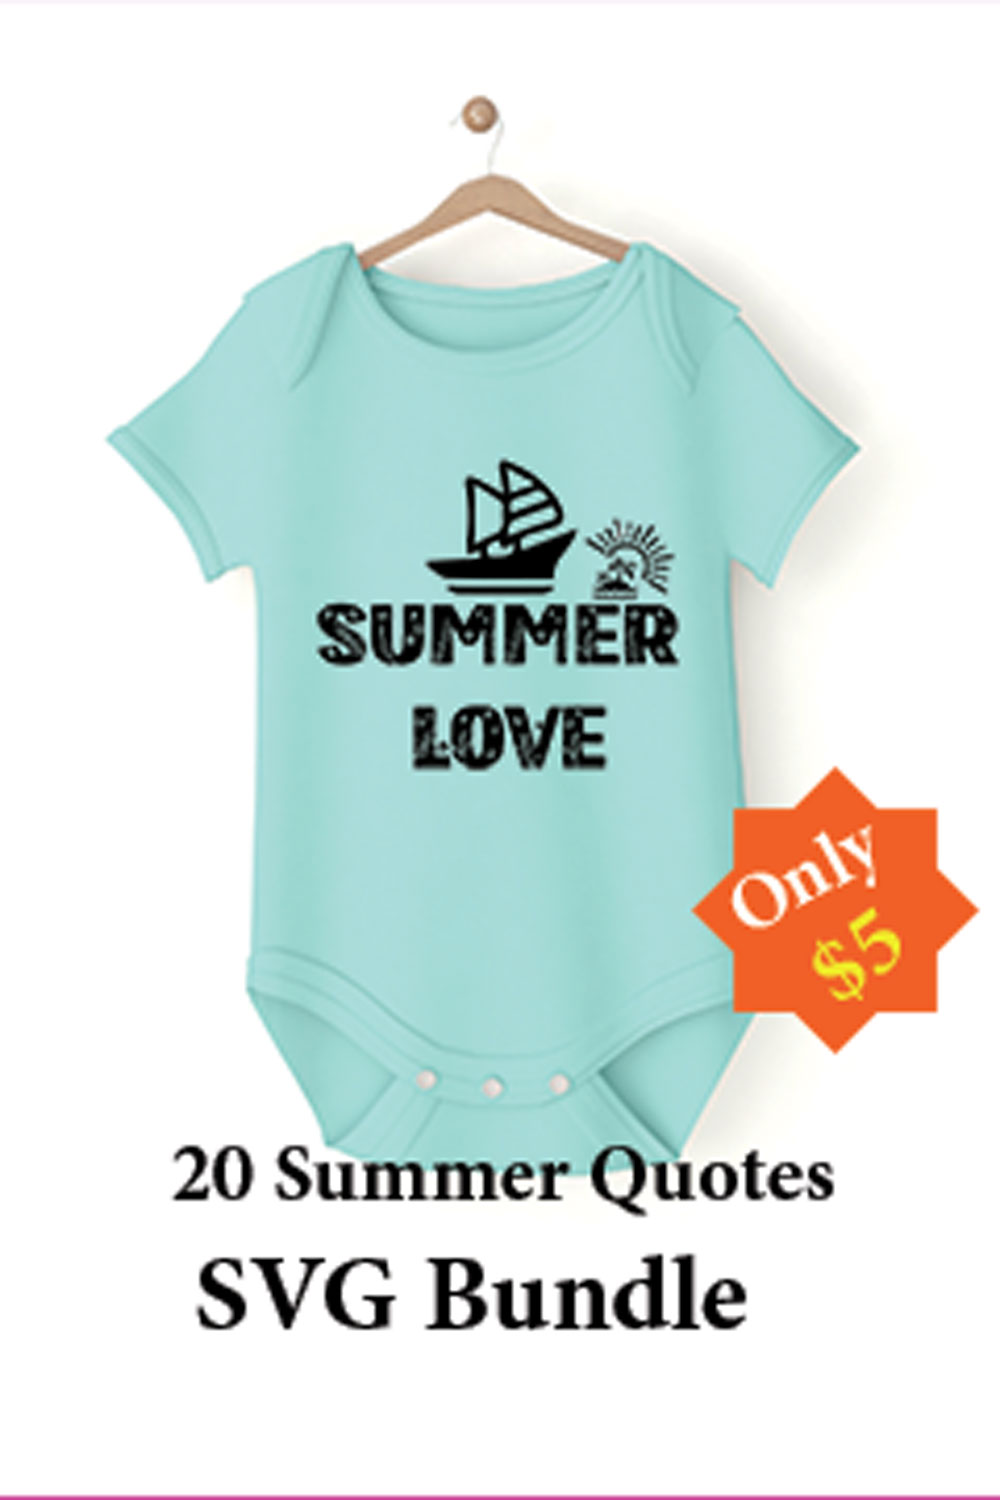 Summer Quotes SVG Bundle pinterest image.